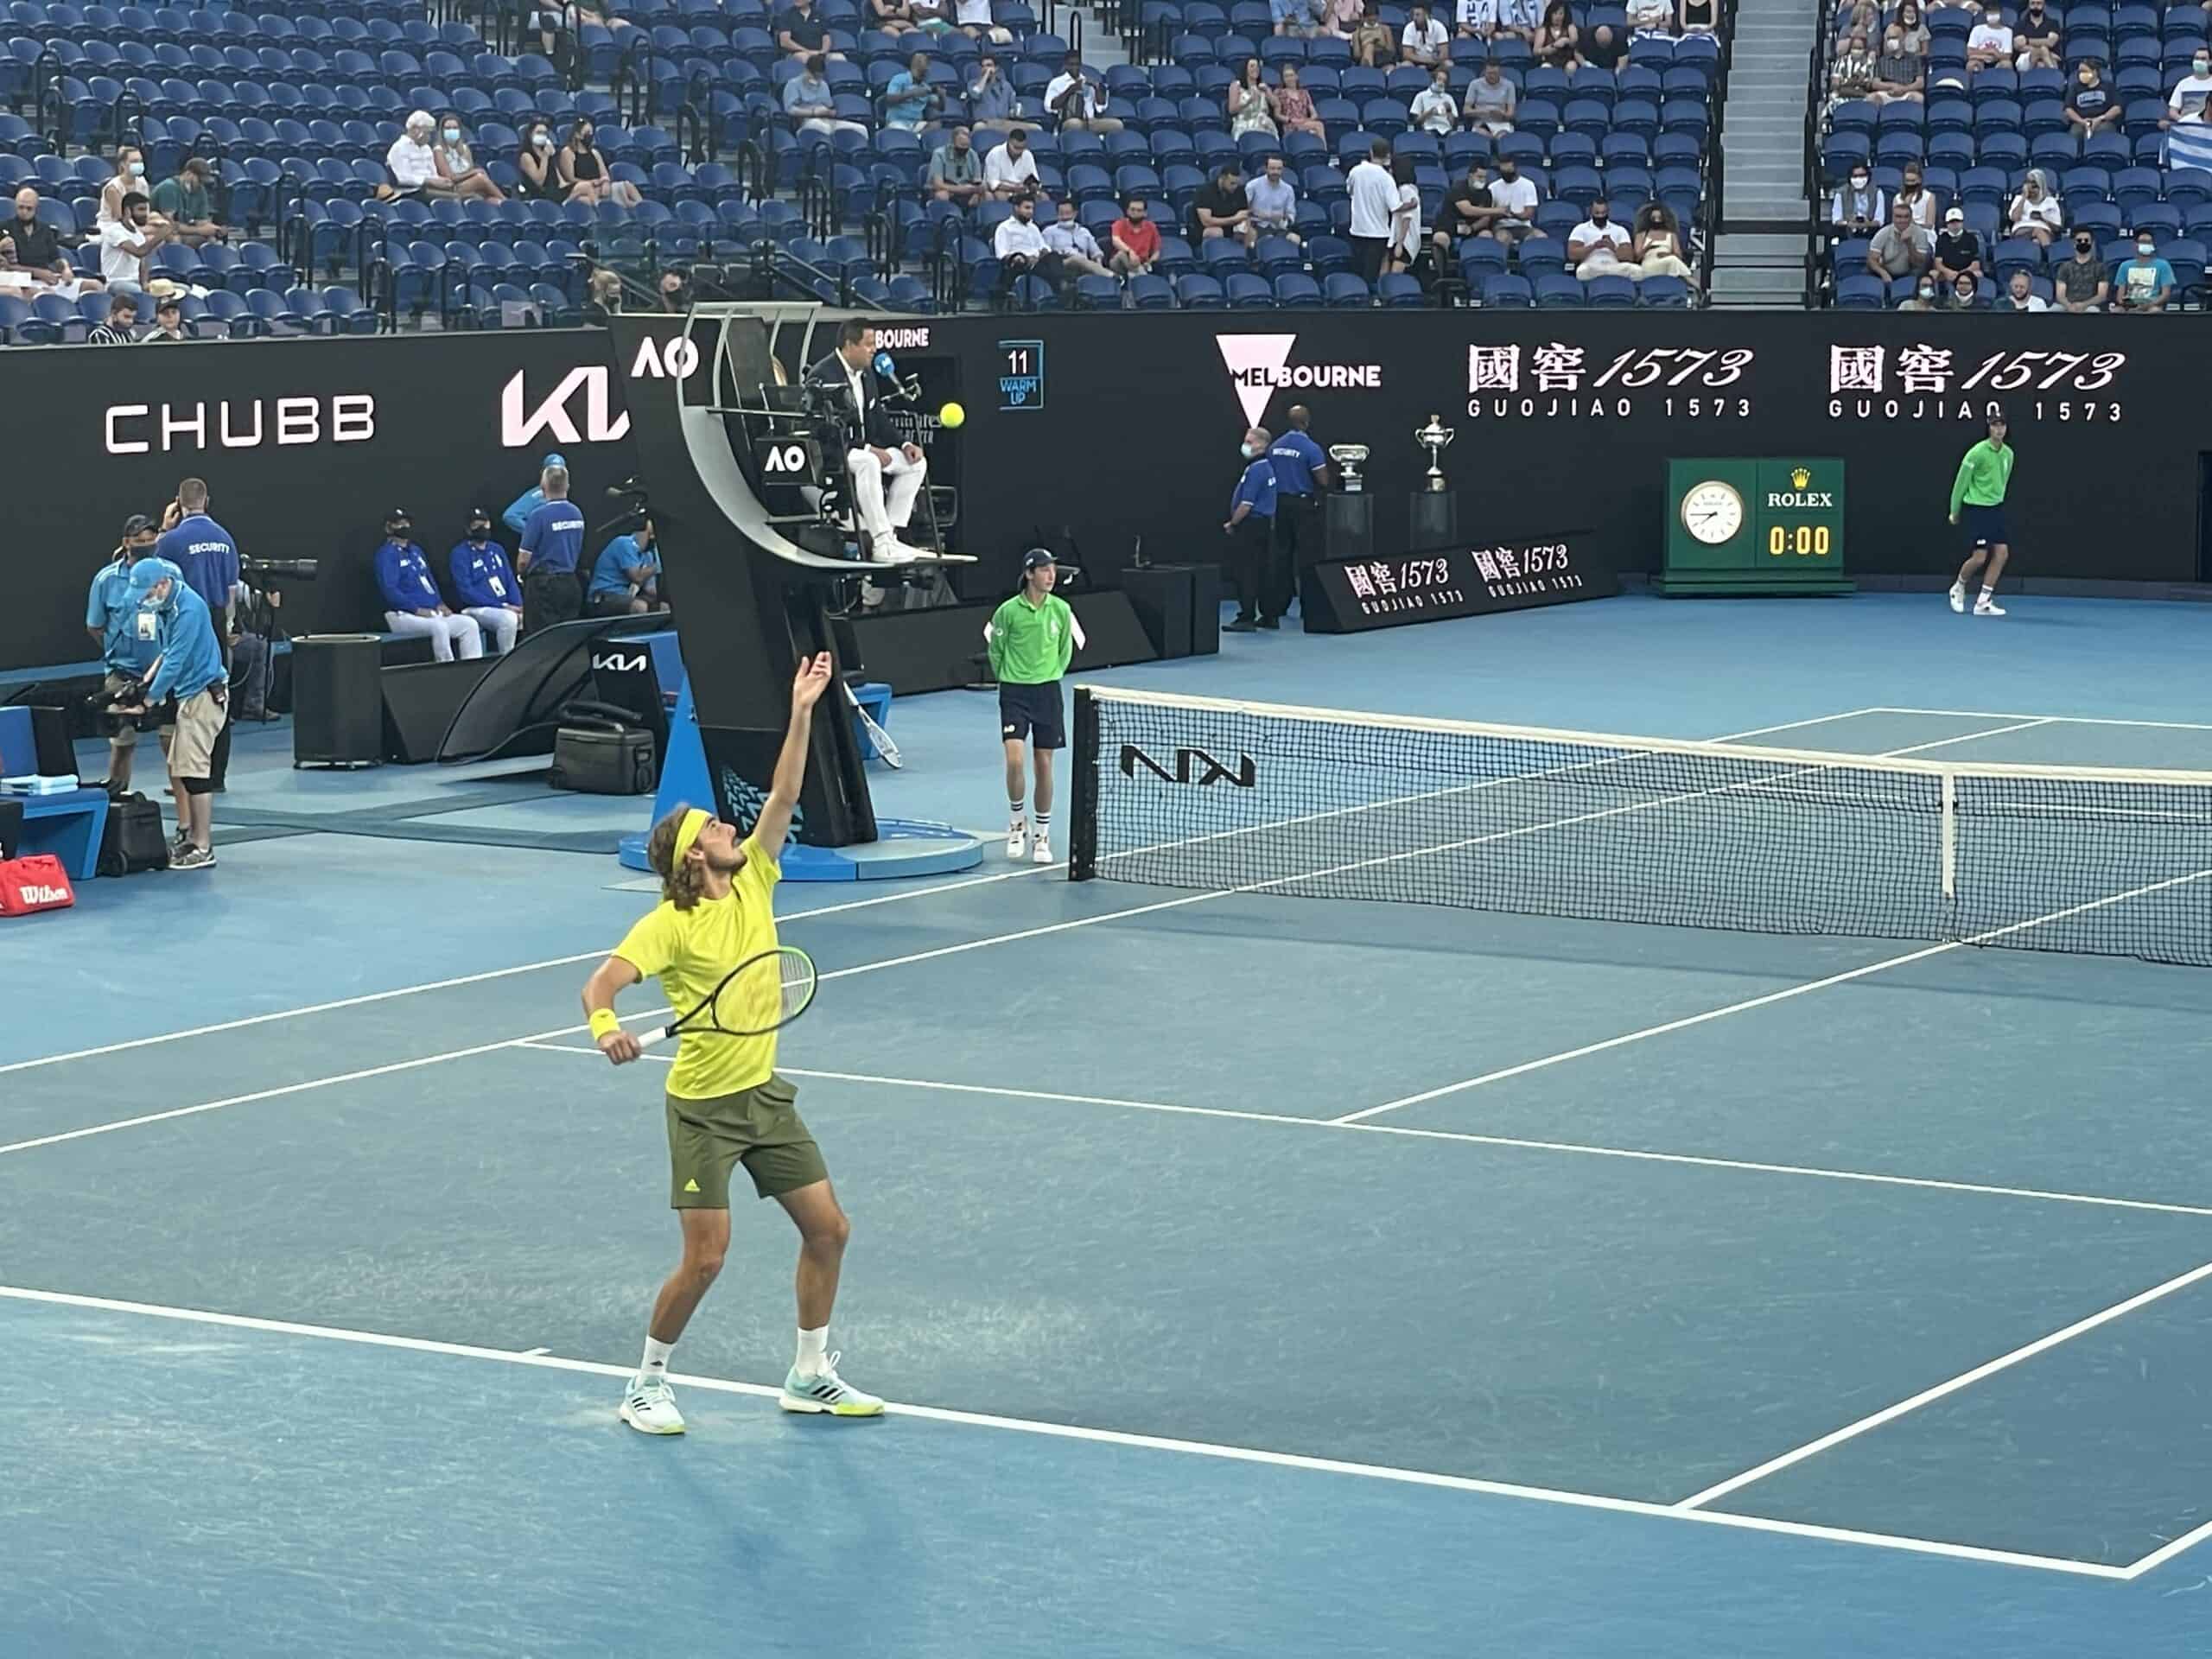 Stefanos Tsitsipas’ journey at the 2021 Australian Open ends